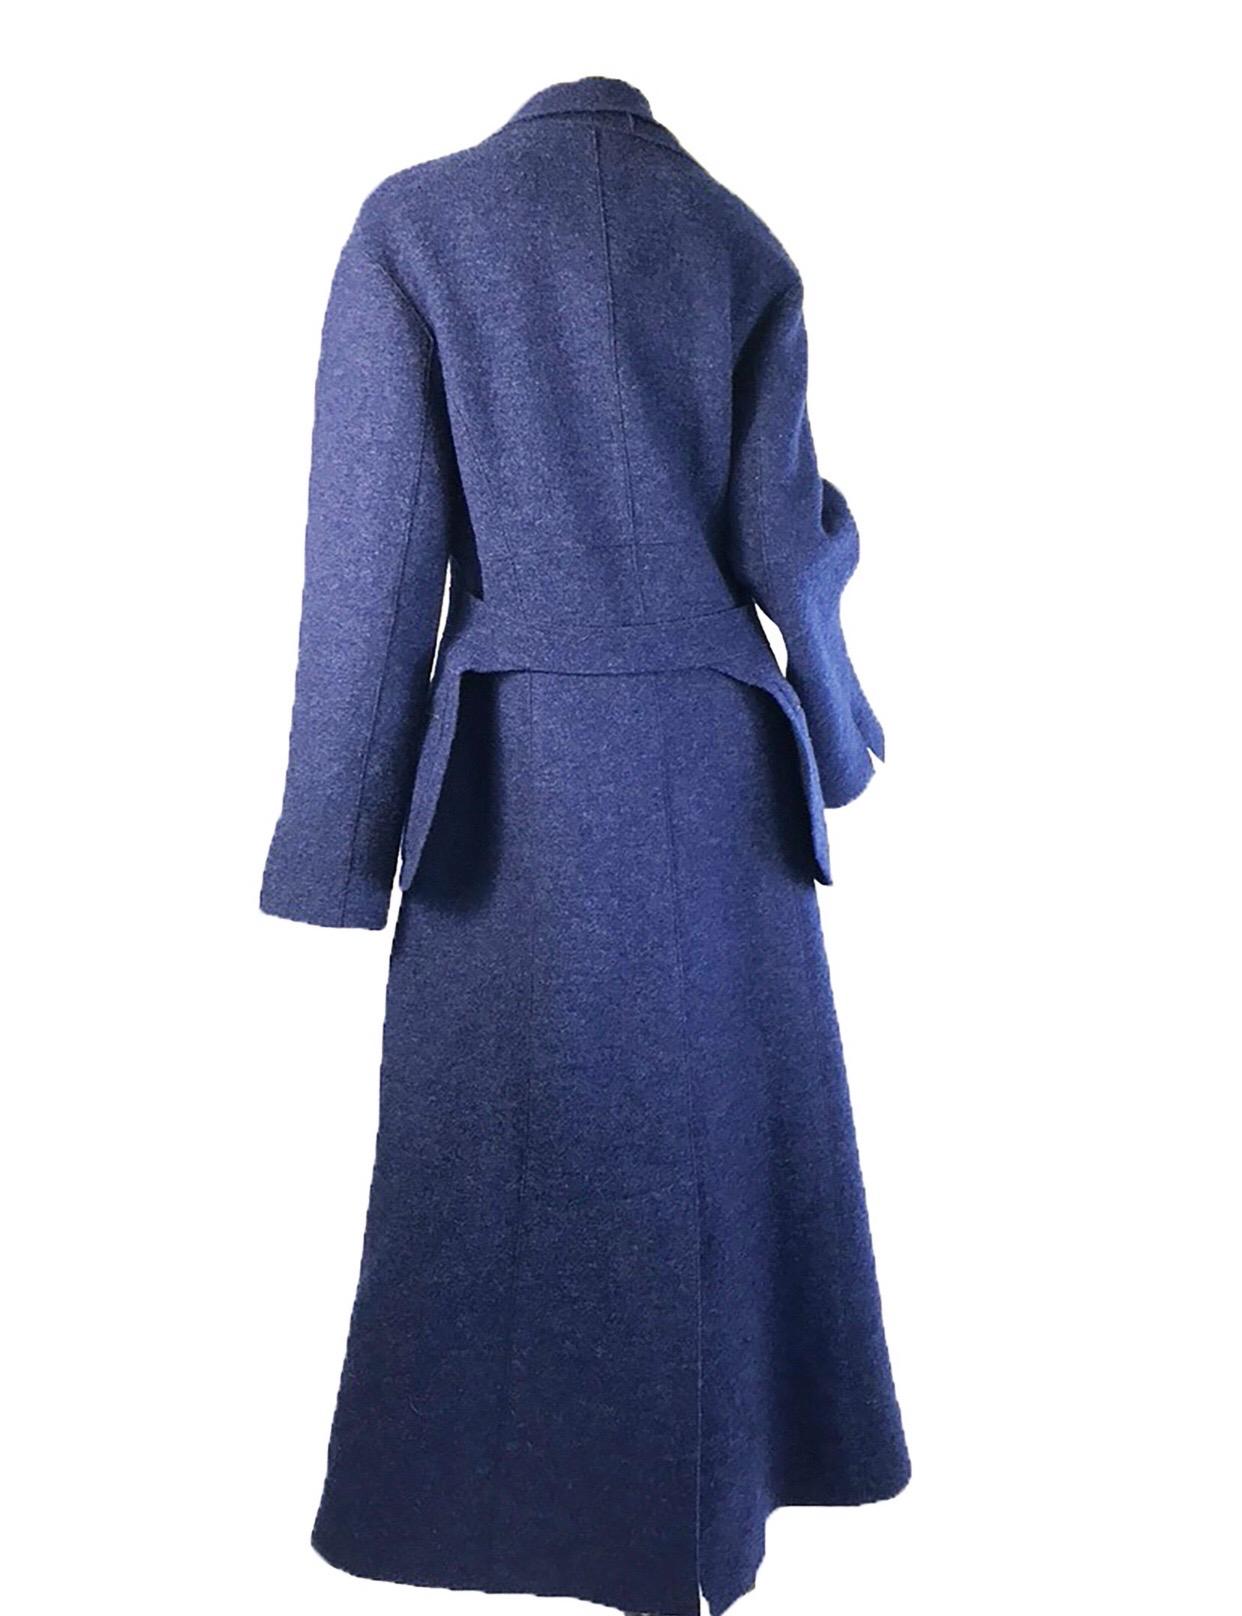 1999 Chanel blue wool coat with halter pocket belt. Condition: Excellent. Size L / US 10/ FR 42

38